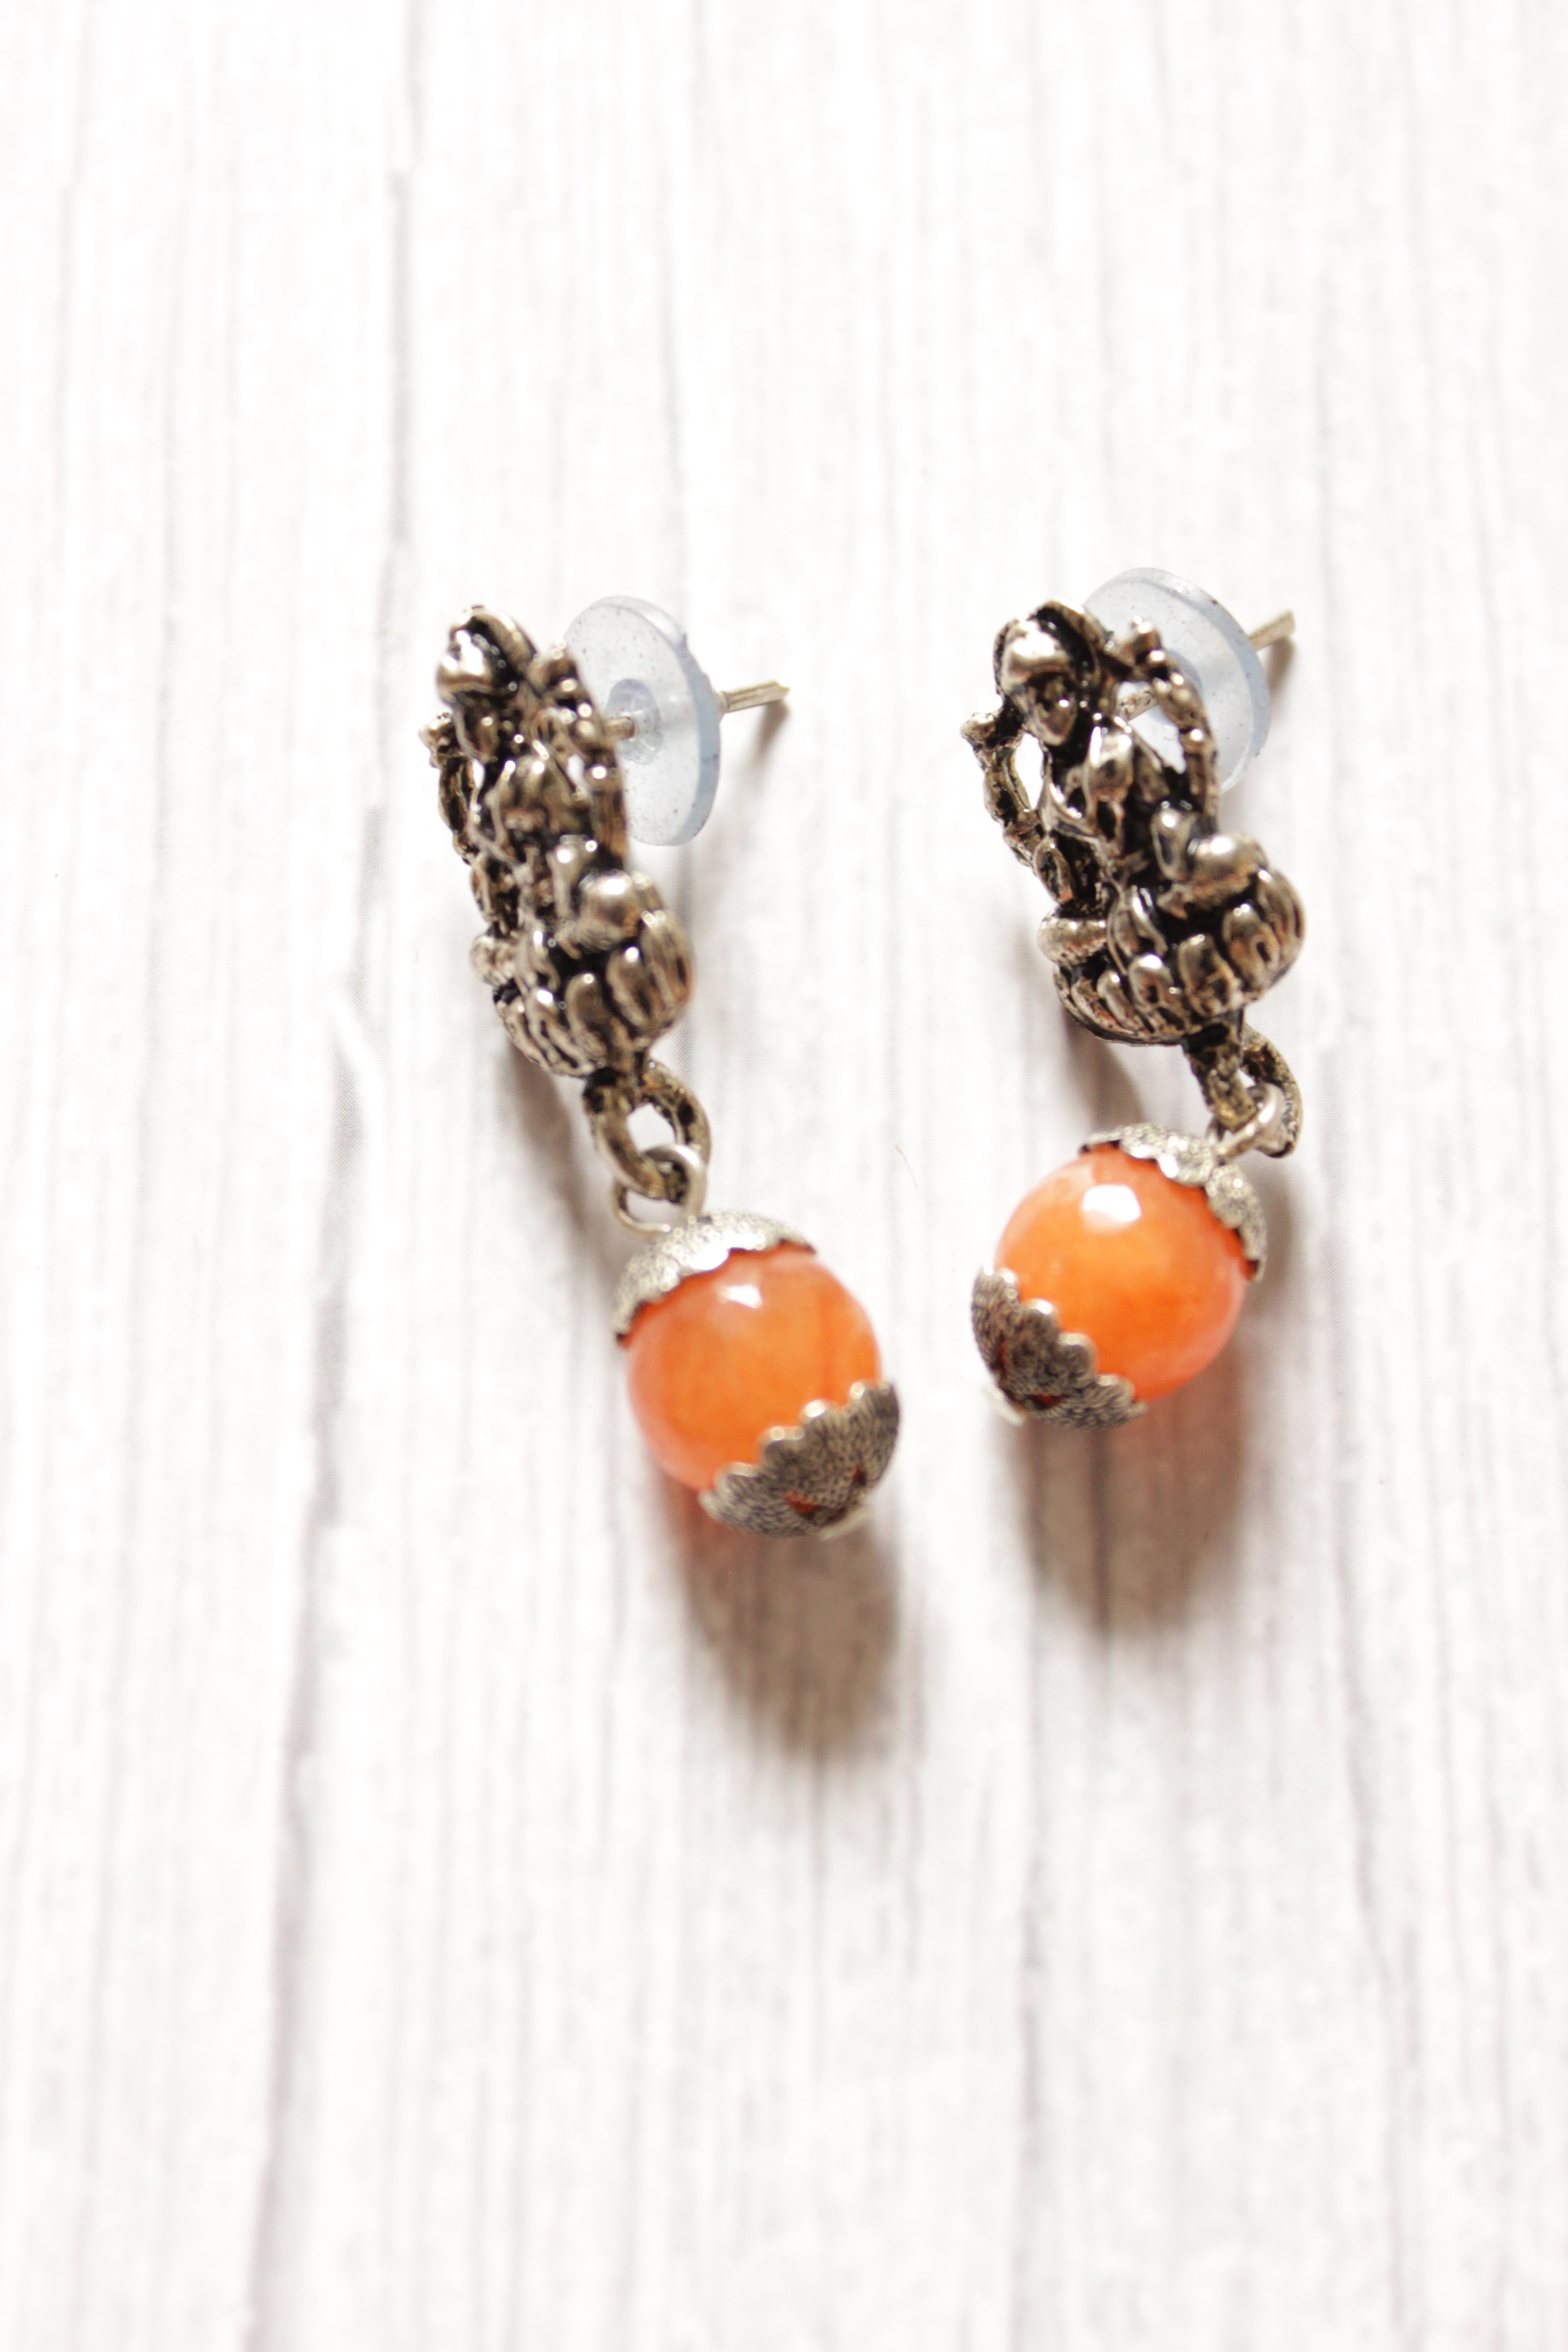 Orange Jade Beads Religious Motif Metal Pendant Necklace Set